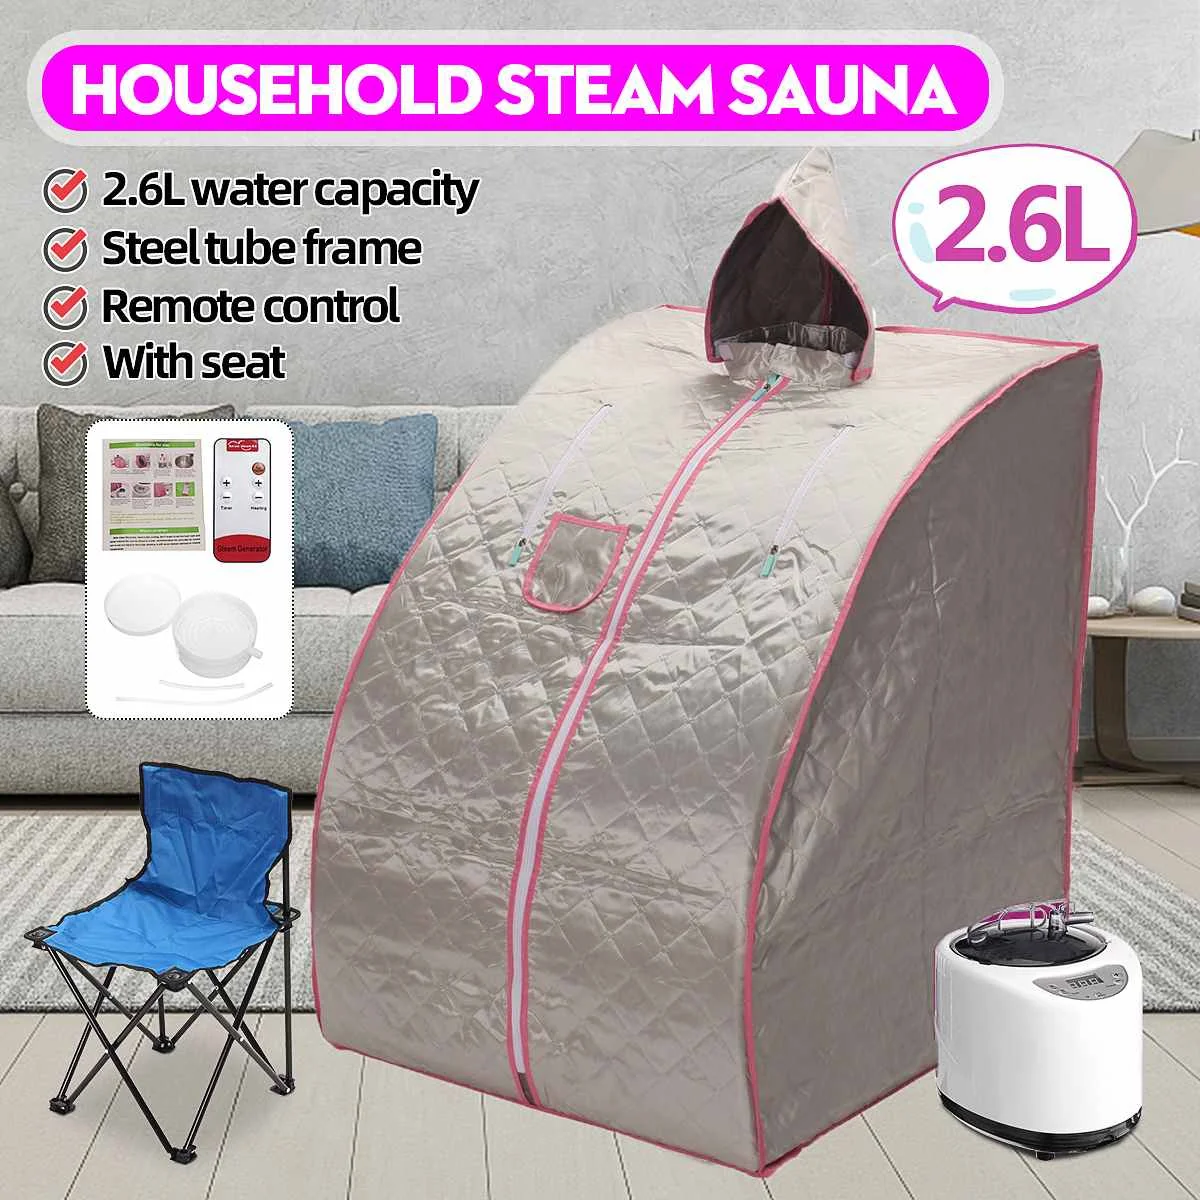 

Portable Steam Sauna Home Sauna Generator Slimming Household Sauna Box Ease Insomnia Stainless Steel Pipe Support STEAMER Cabin